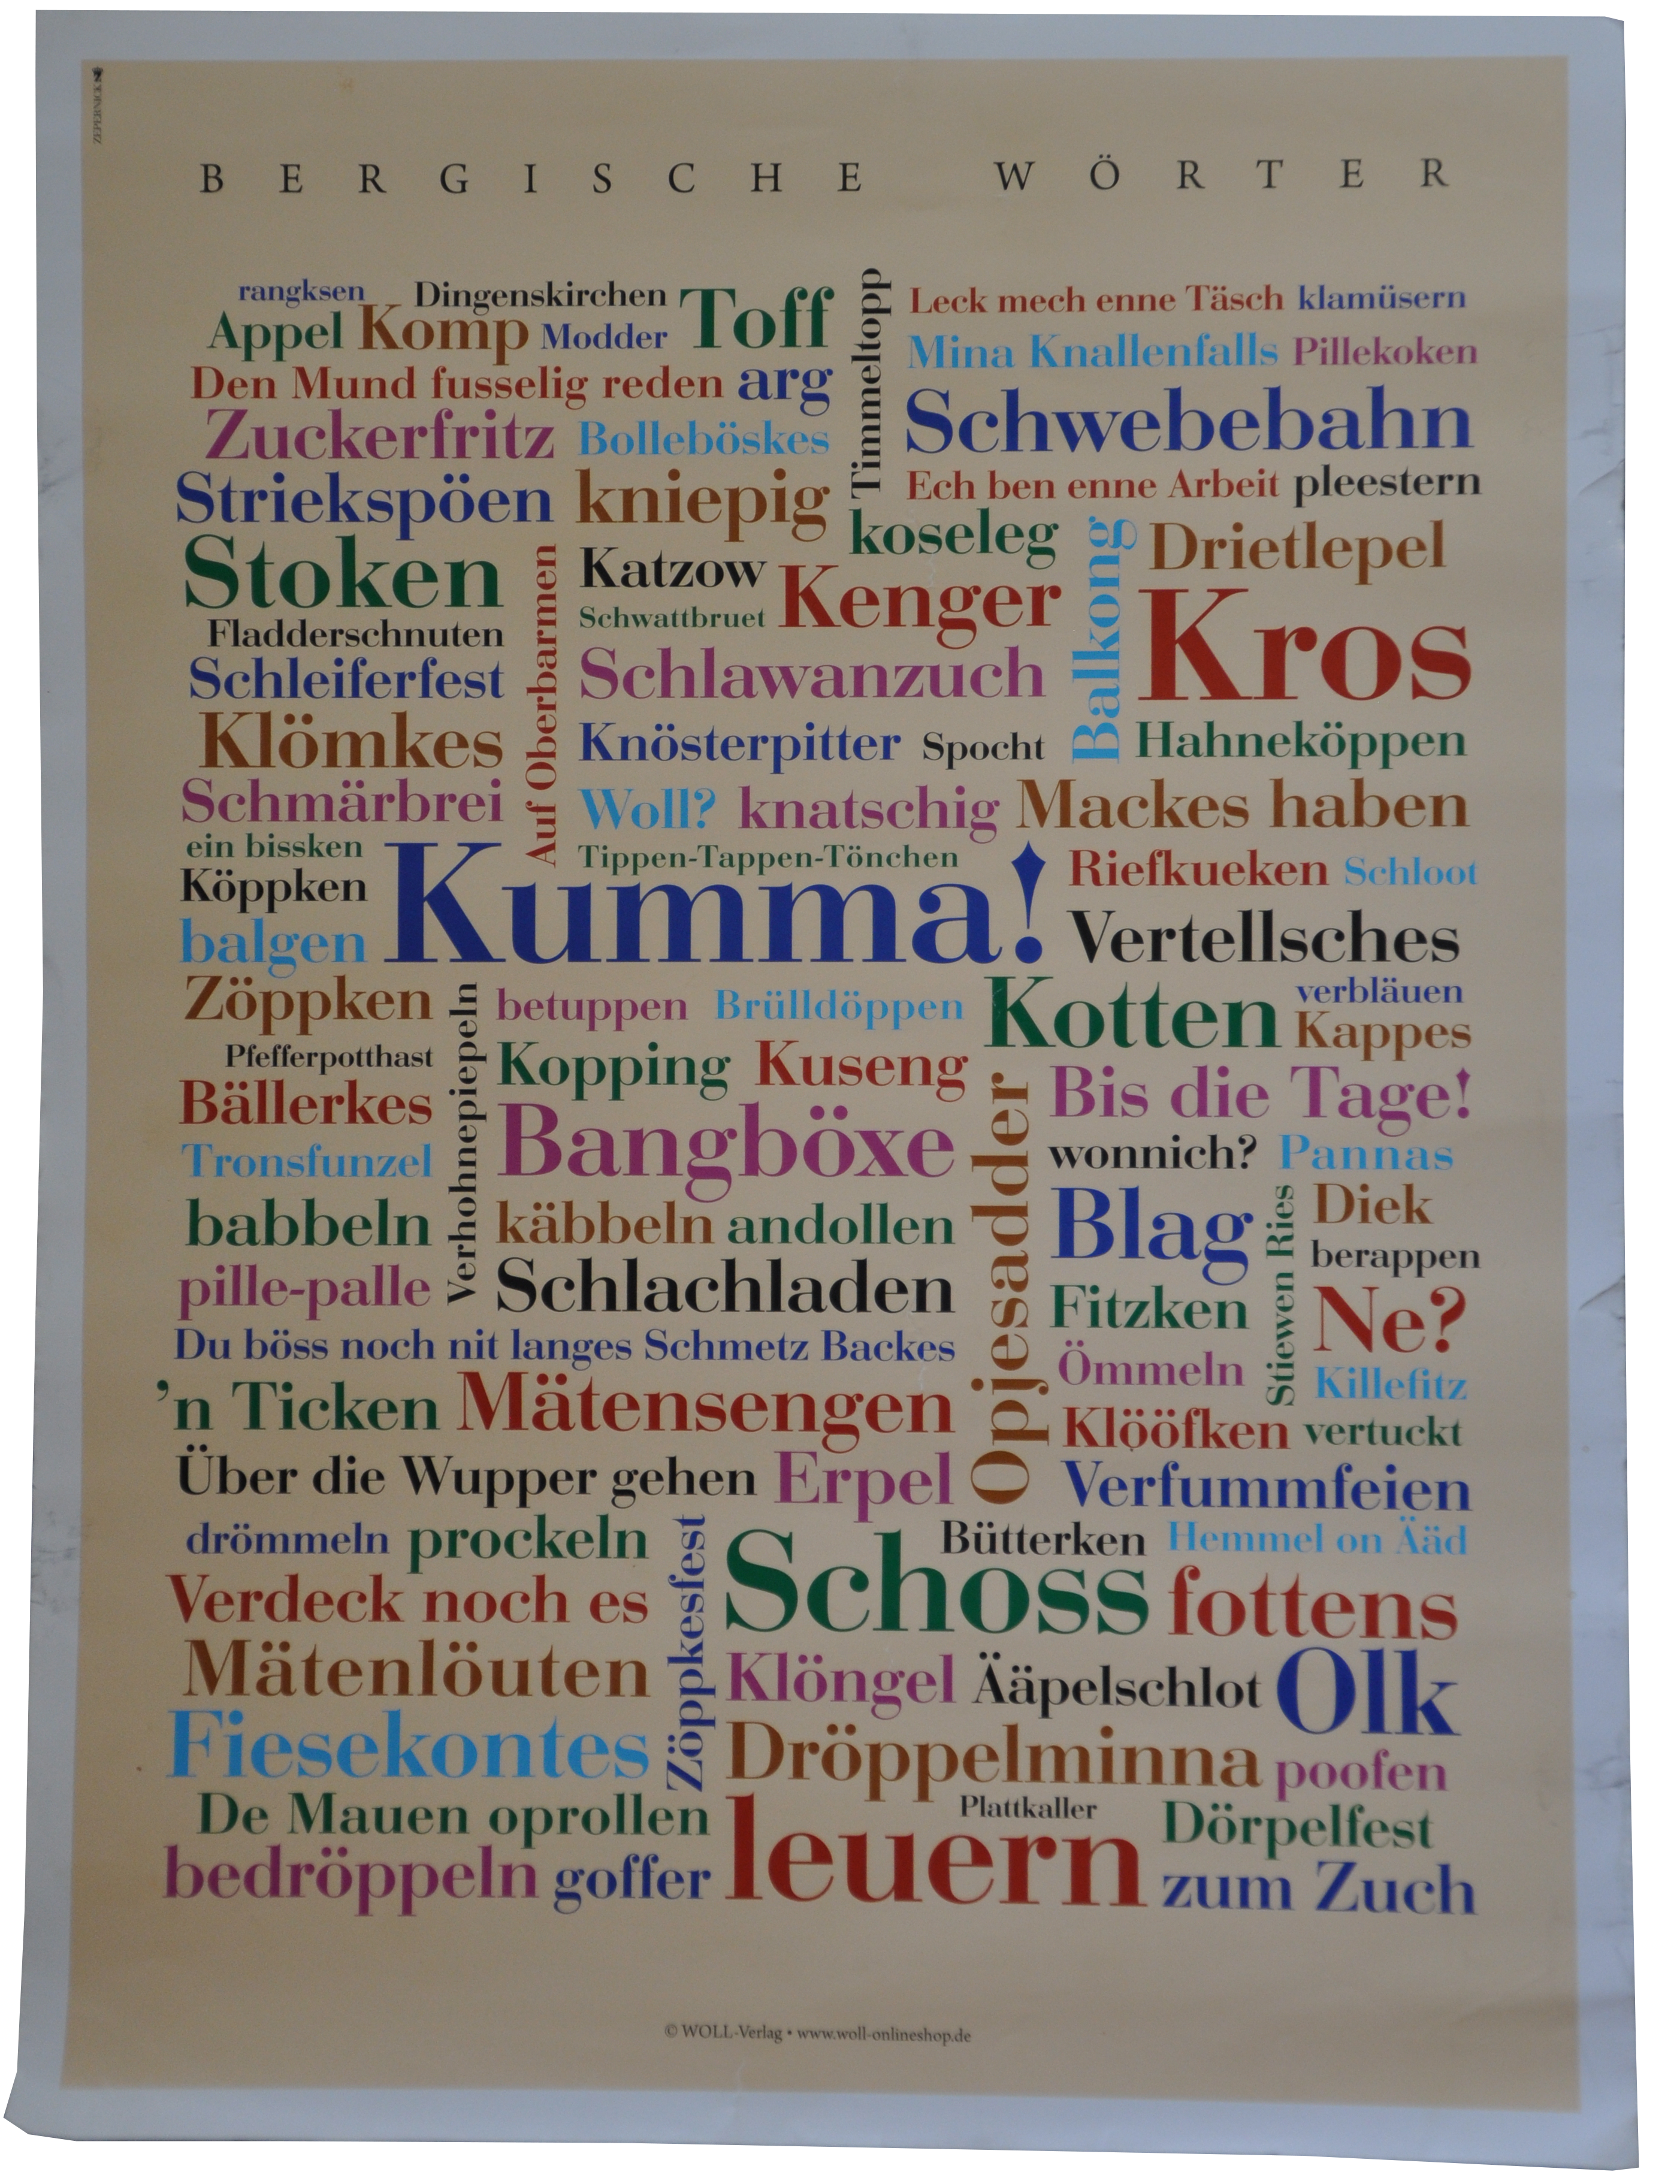 Poster Bergische Wörter Mini